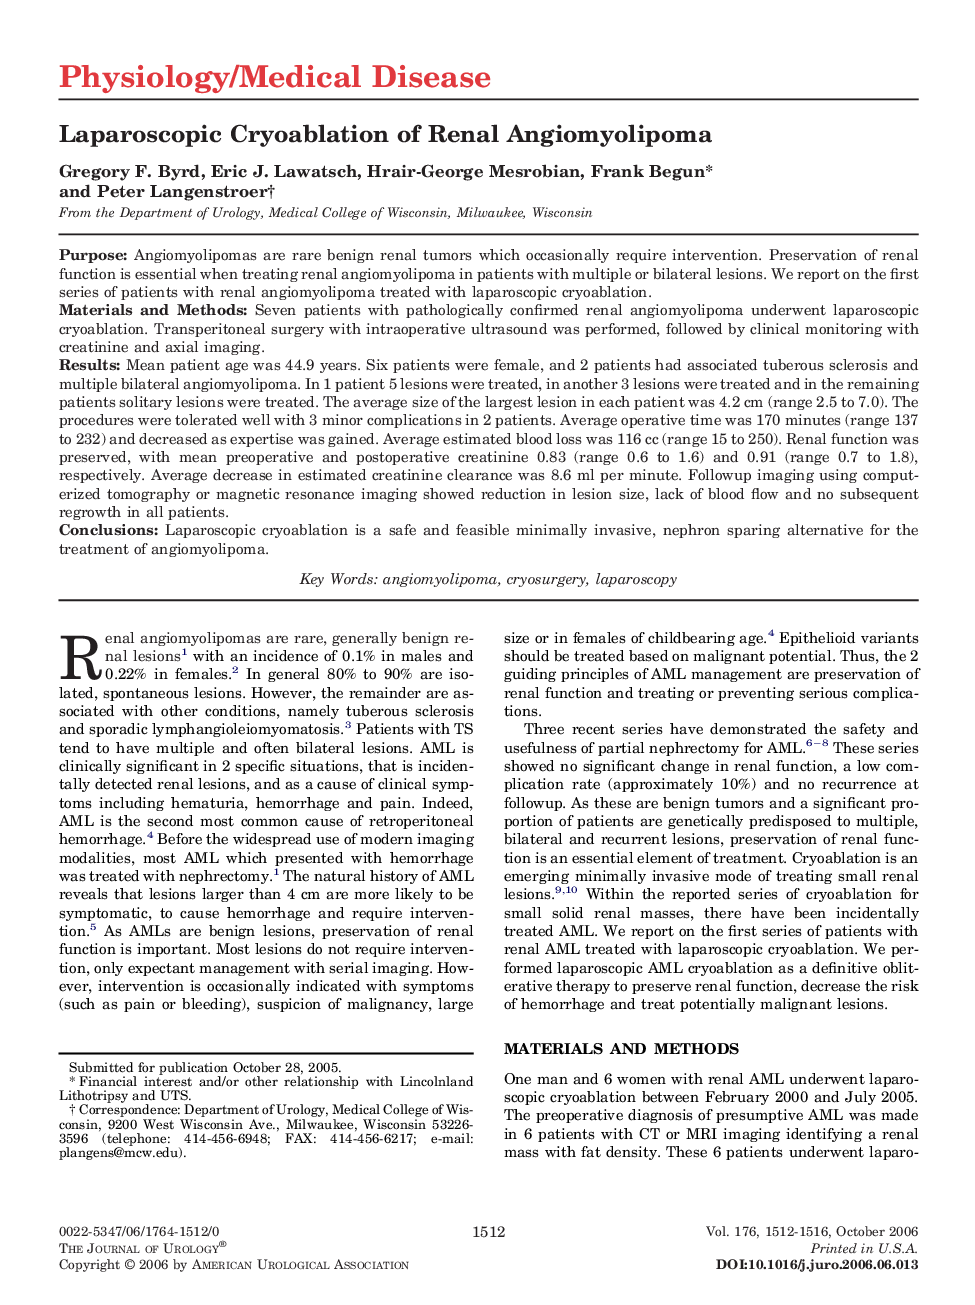 Laparoscopic Cryoablation of Renal Angiomyolipoma